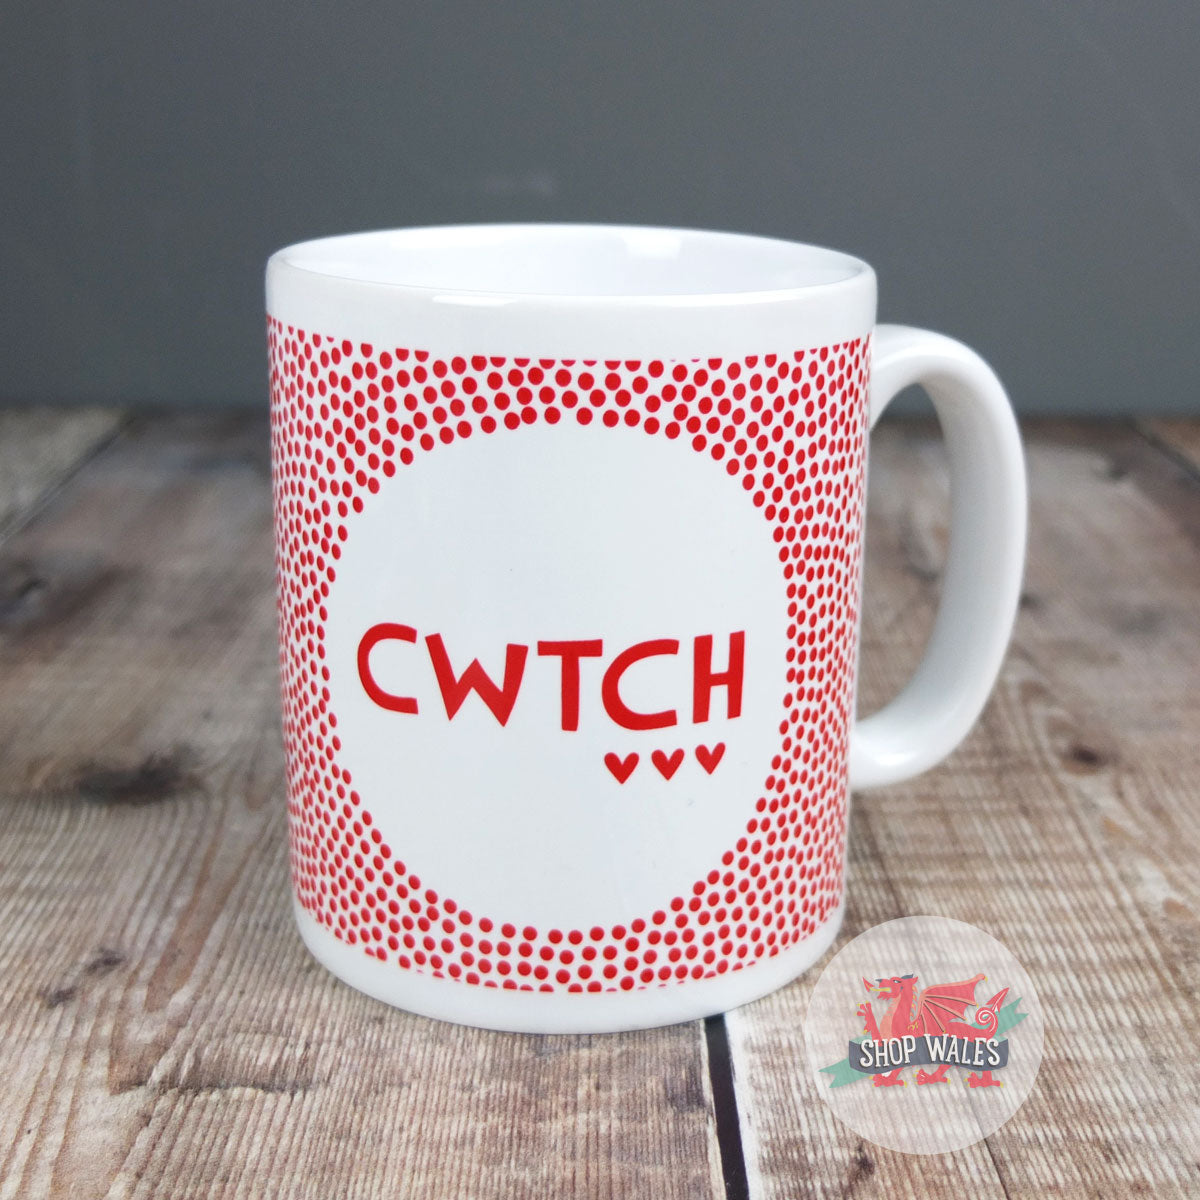 Red Cwtch Dot Mug